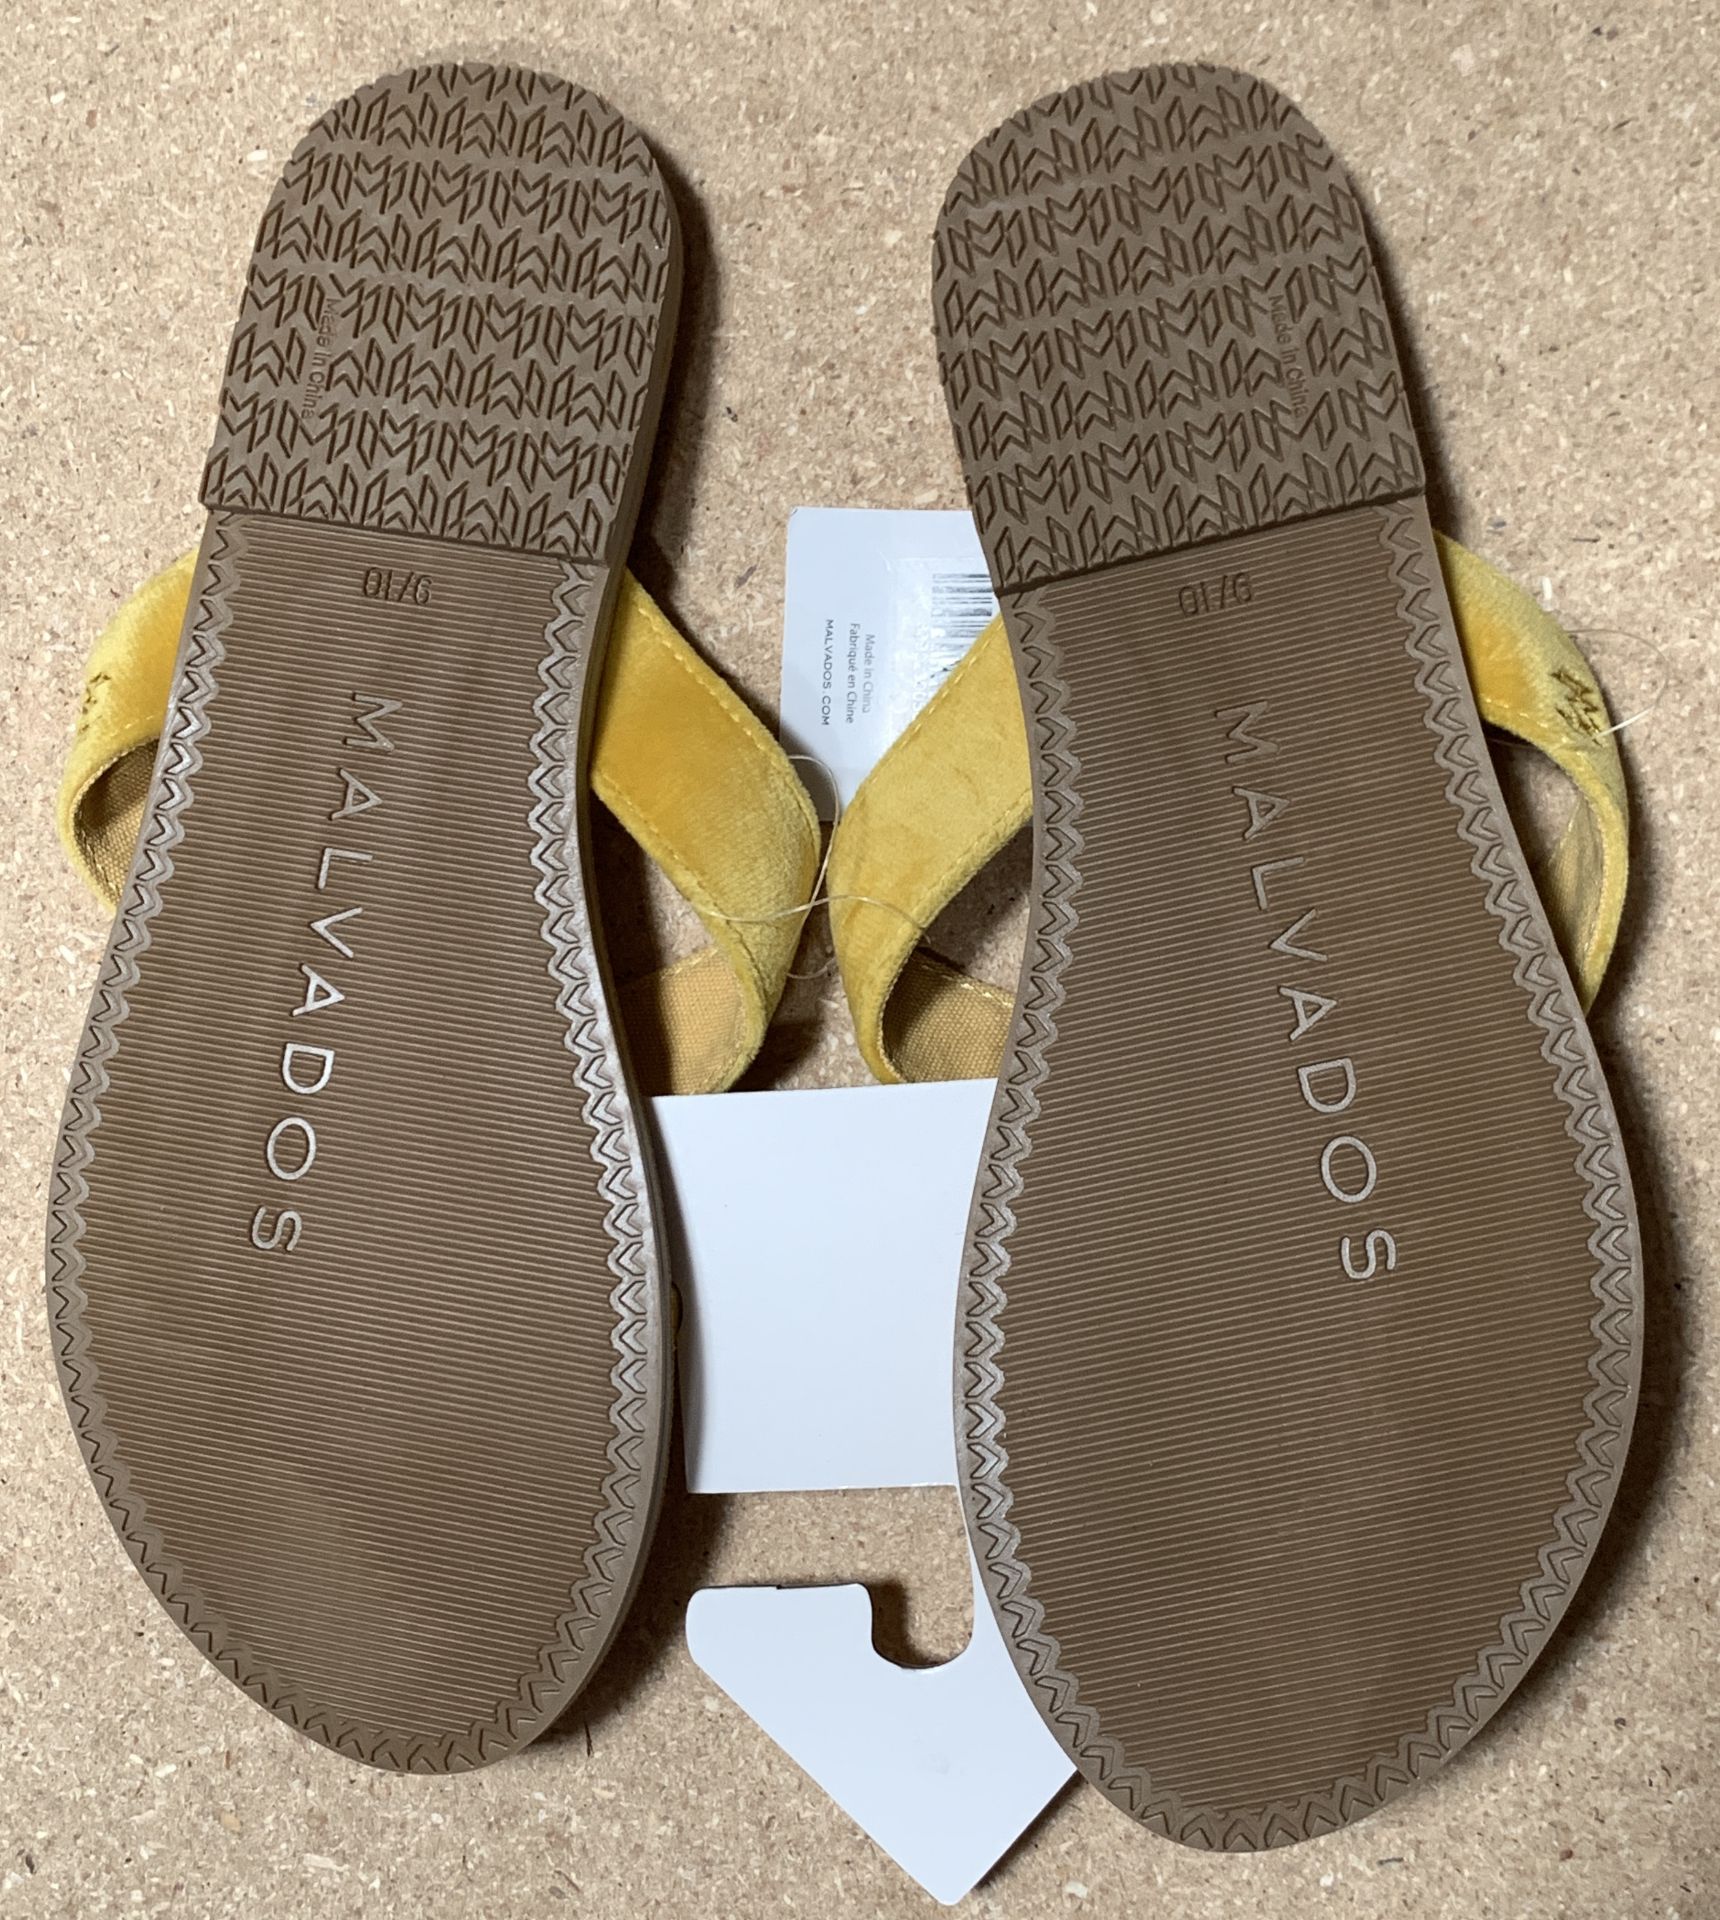 6 Pairs Malvados Flip Flop Sandals, New with Tags, Various Sizes, Icon Neko Plush (Retail $276) - Image 4 of 5